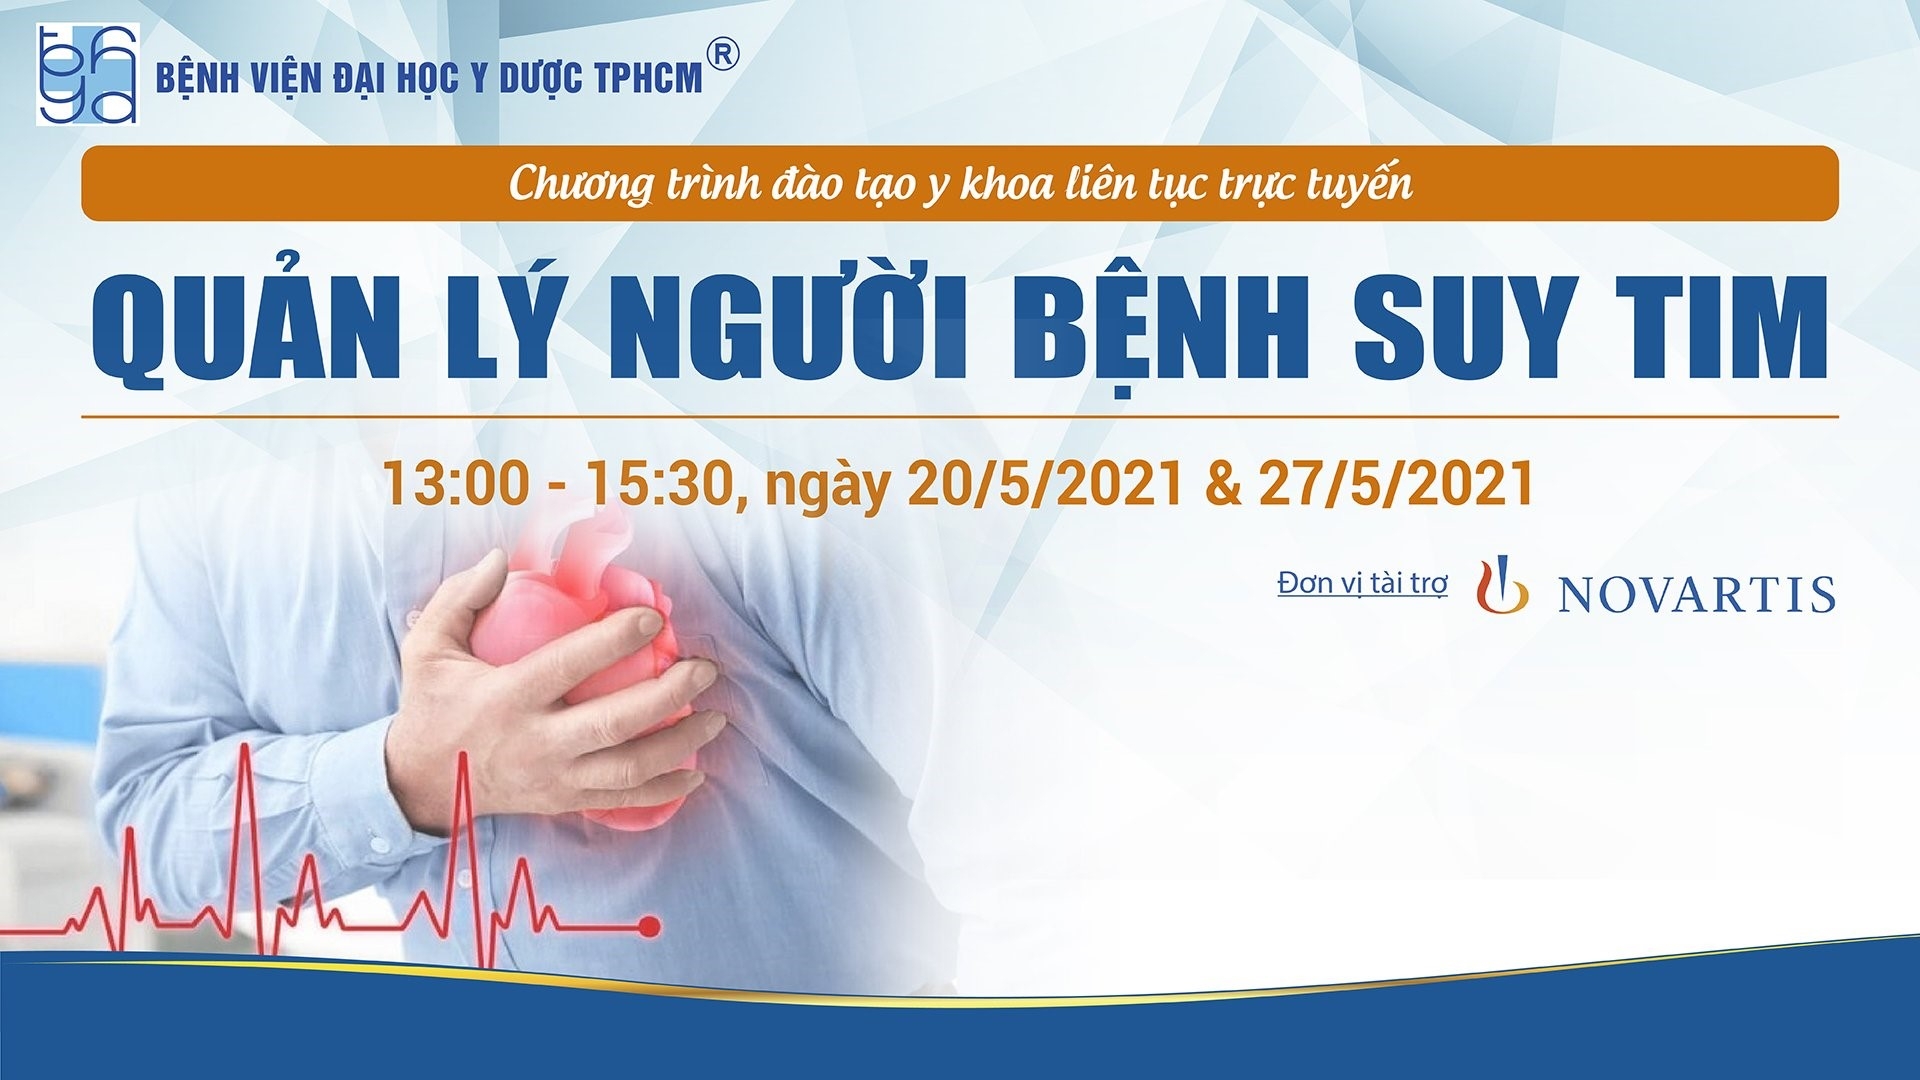 Ho Chi Minh City University and Novartis implement training on heart failure management